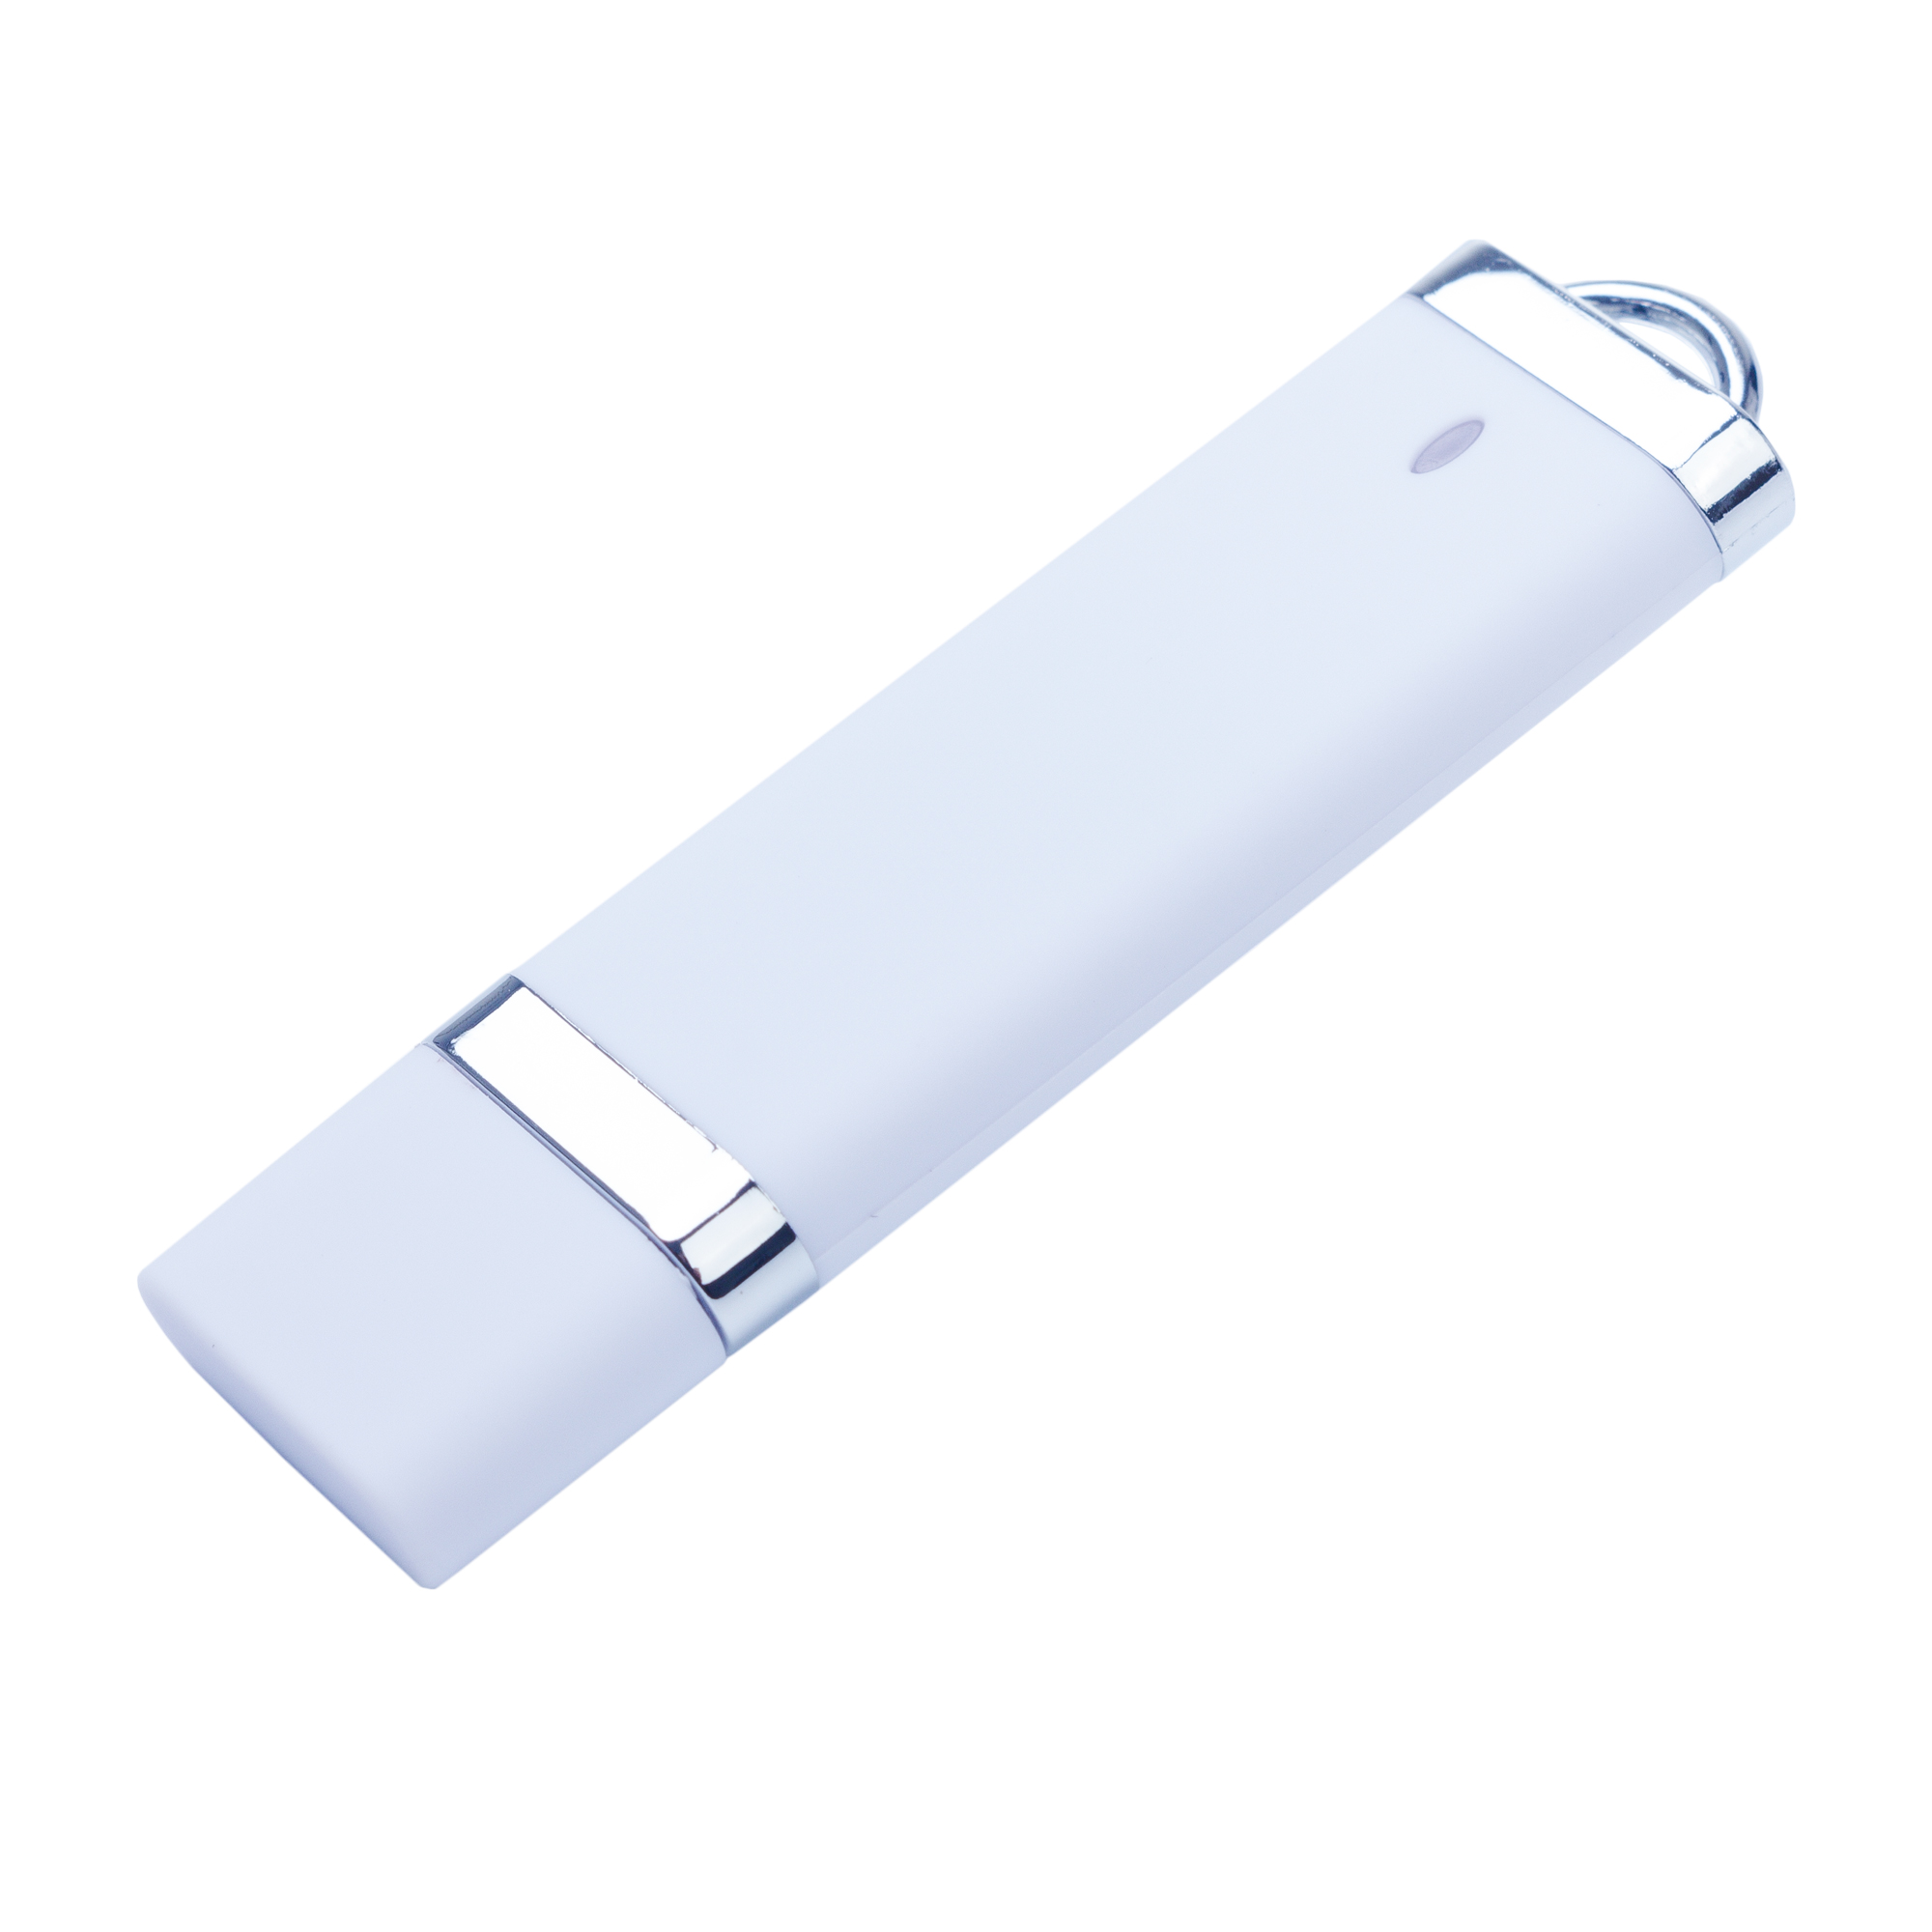 USB-флешка модель 116 Soft Touch, (USB 3.0), объем памяти 32 GB, цвет белый